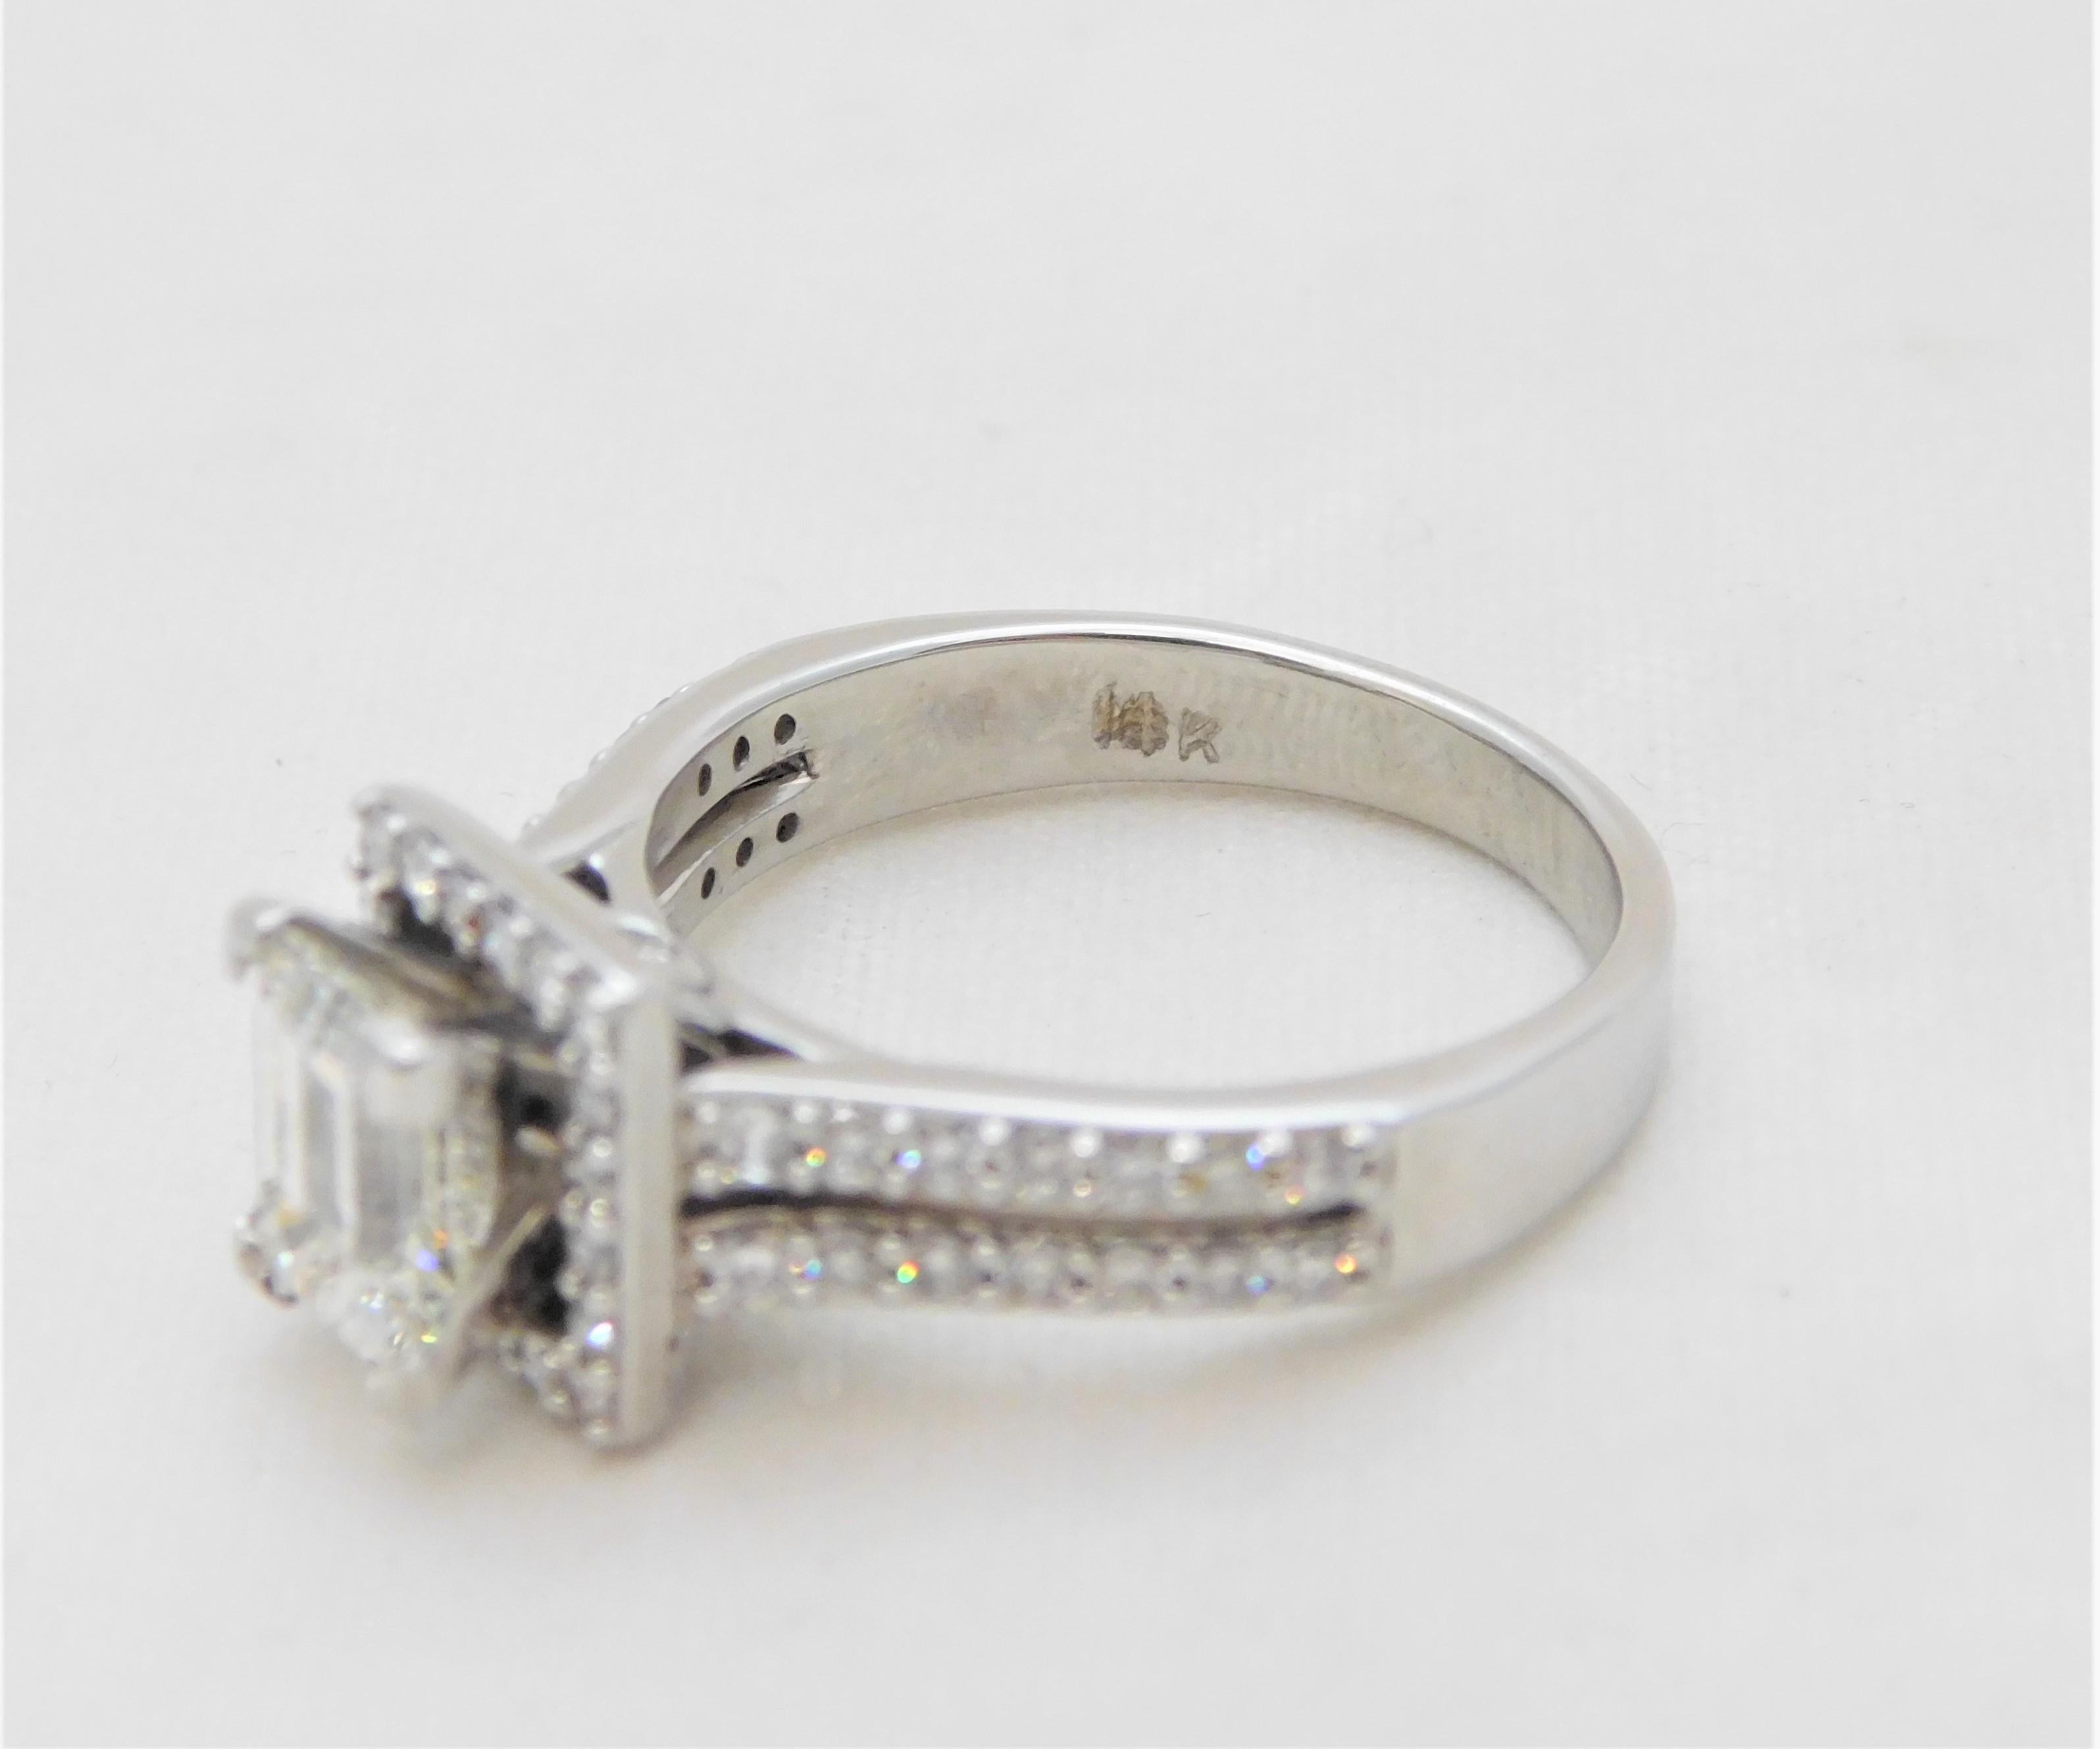 UGS Certified 2.18 Carat Emerald Cut Diamond Engagement Ring 15